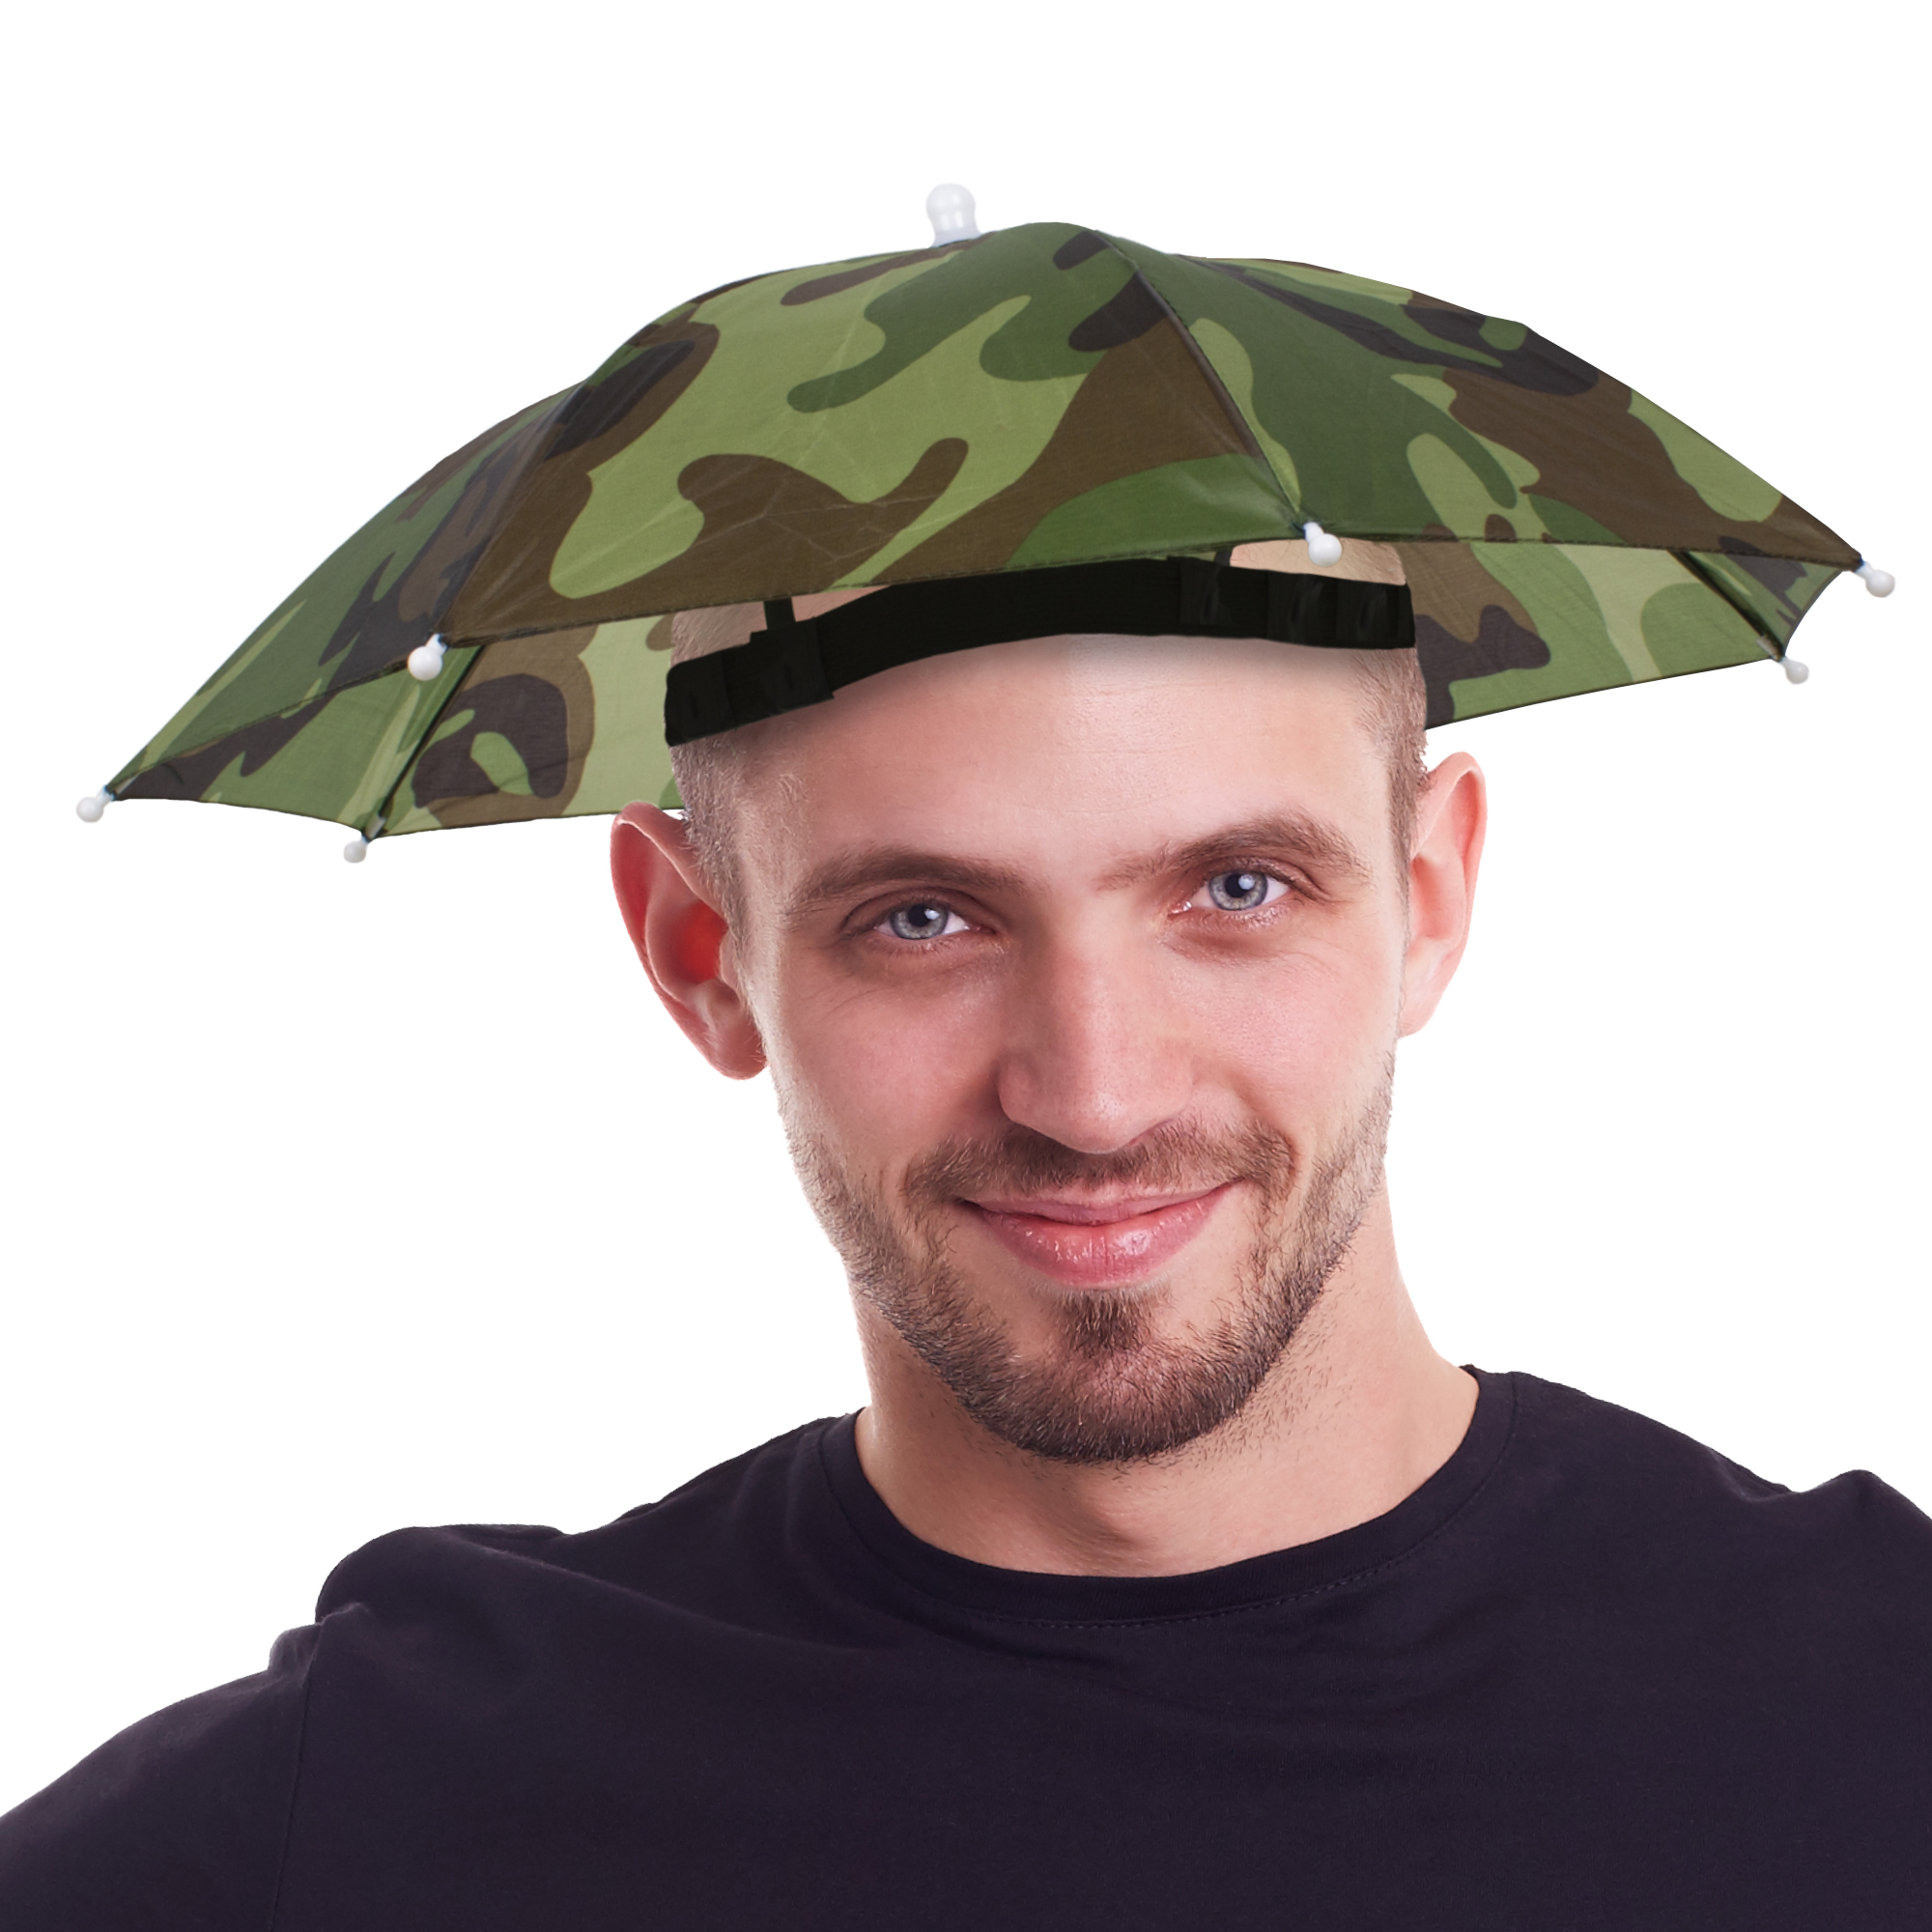 Camouflage Umbrella Hat by Windy City Novelties